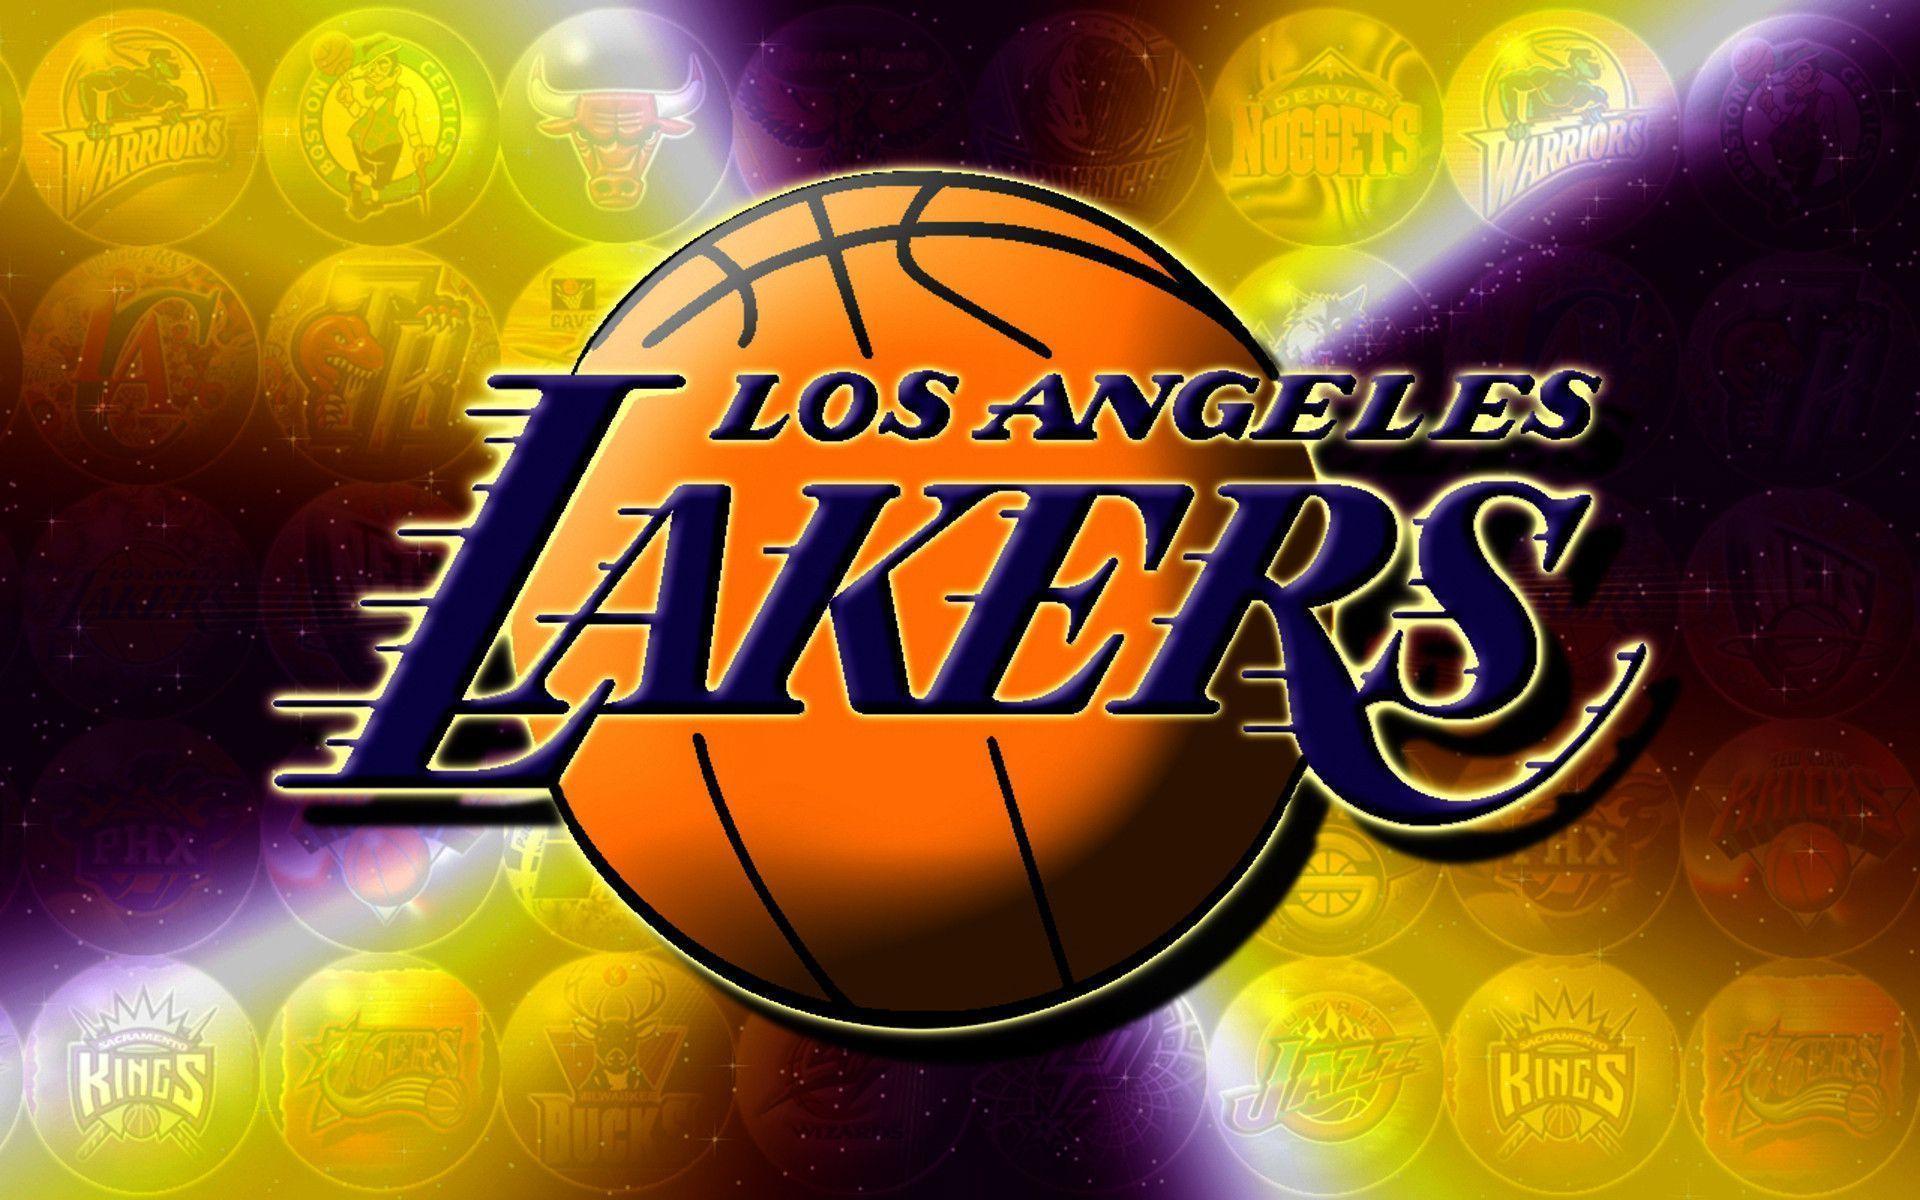 Lakers Logo Wallpaper. Wallpaper, Background, Image, Art Photo